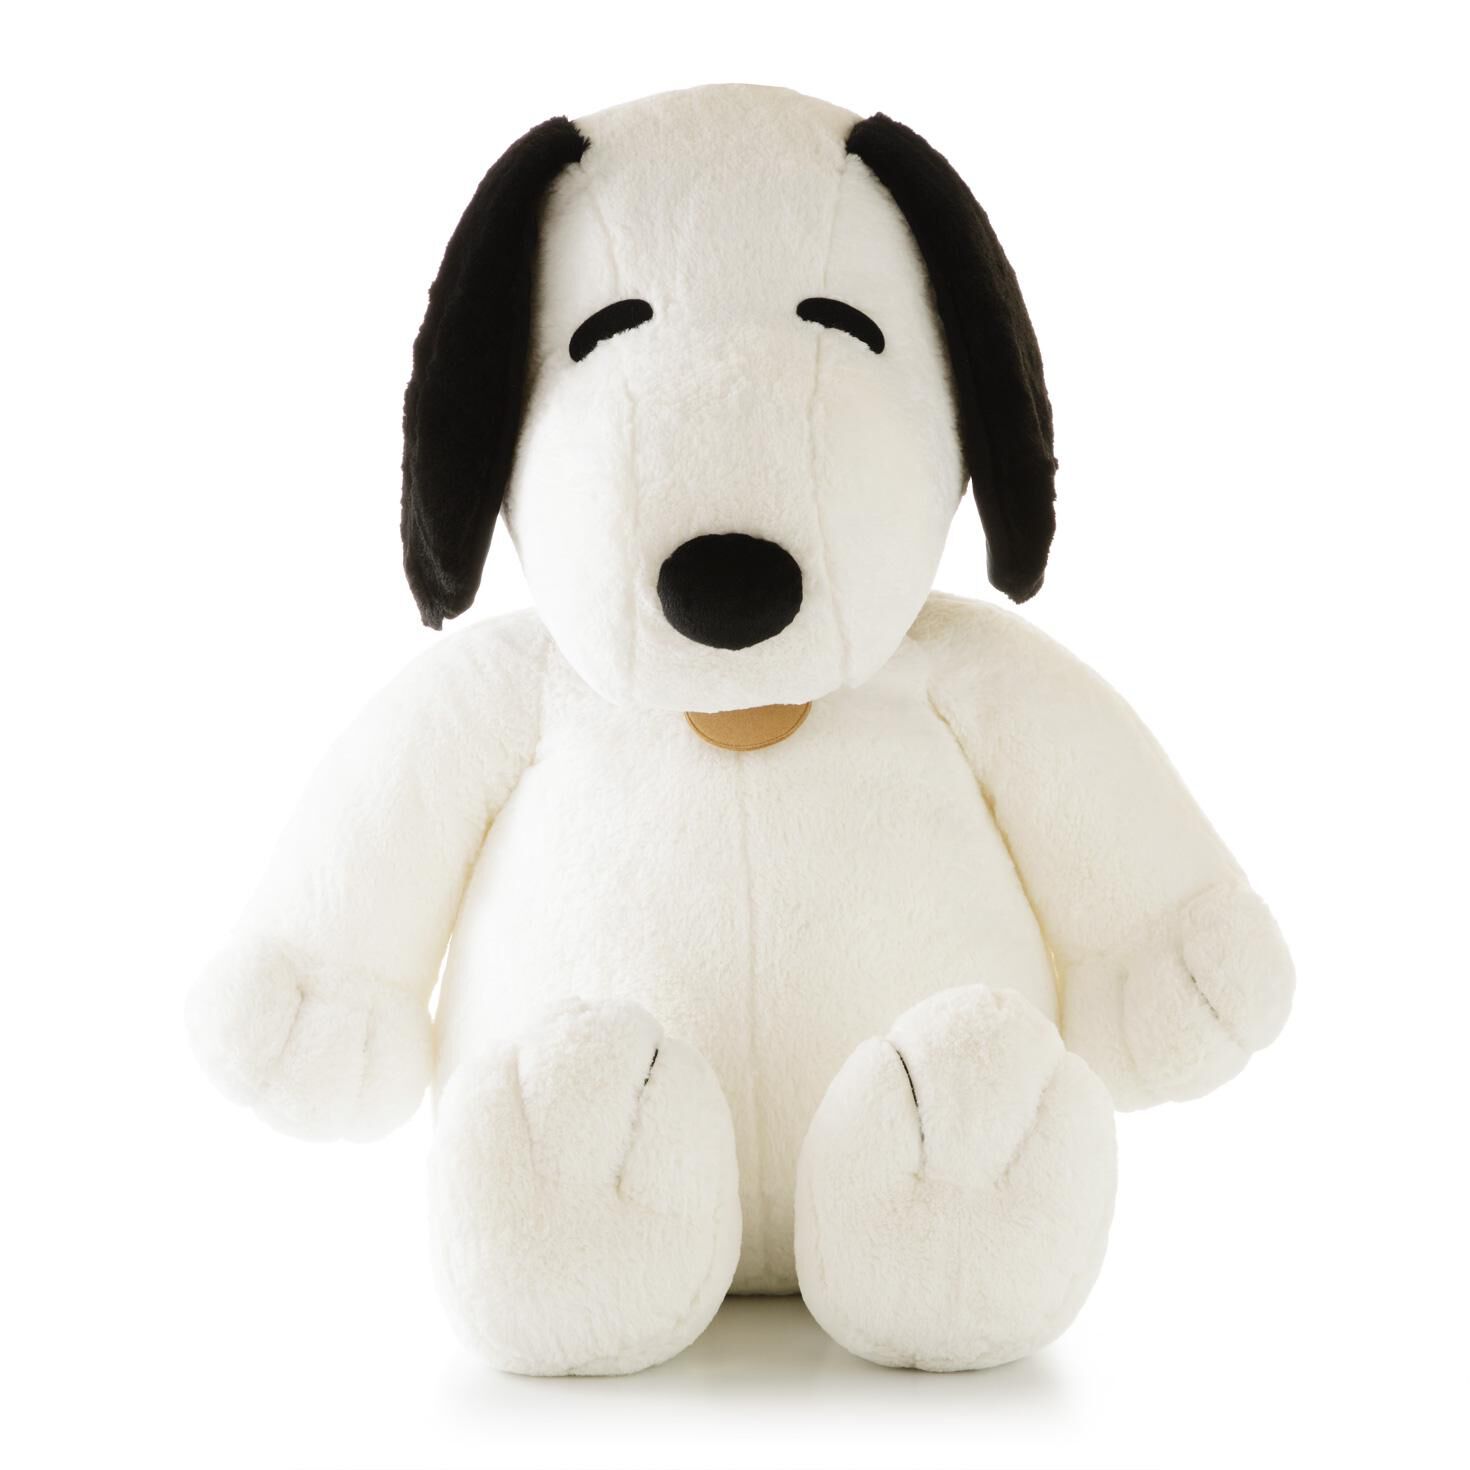 Hallmark Peanuts Snoopy Sweetheart Large Floppy Stuffed Animal 15 Stuffed Animals Movies & TV